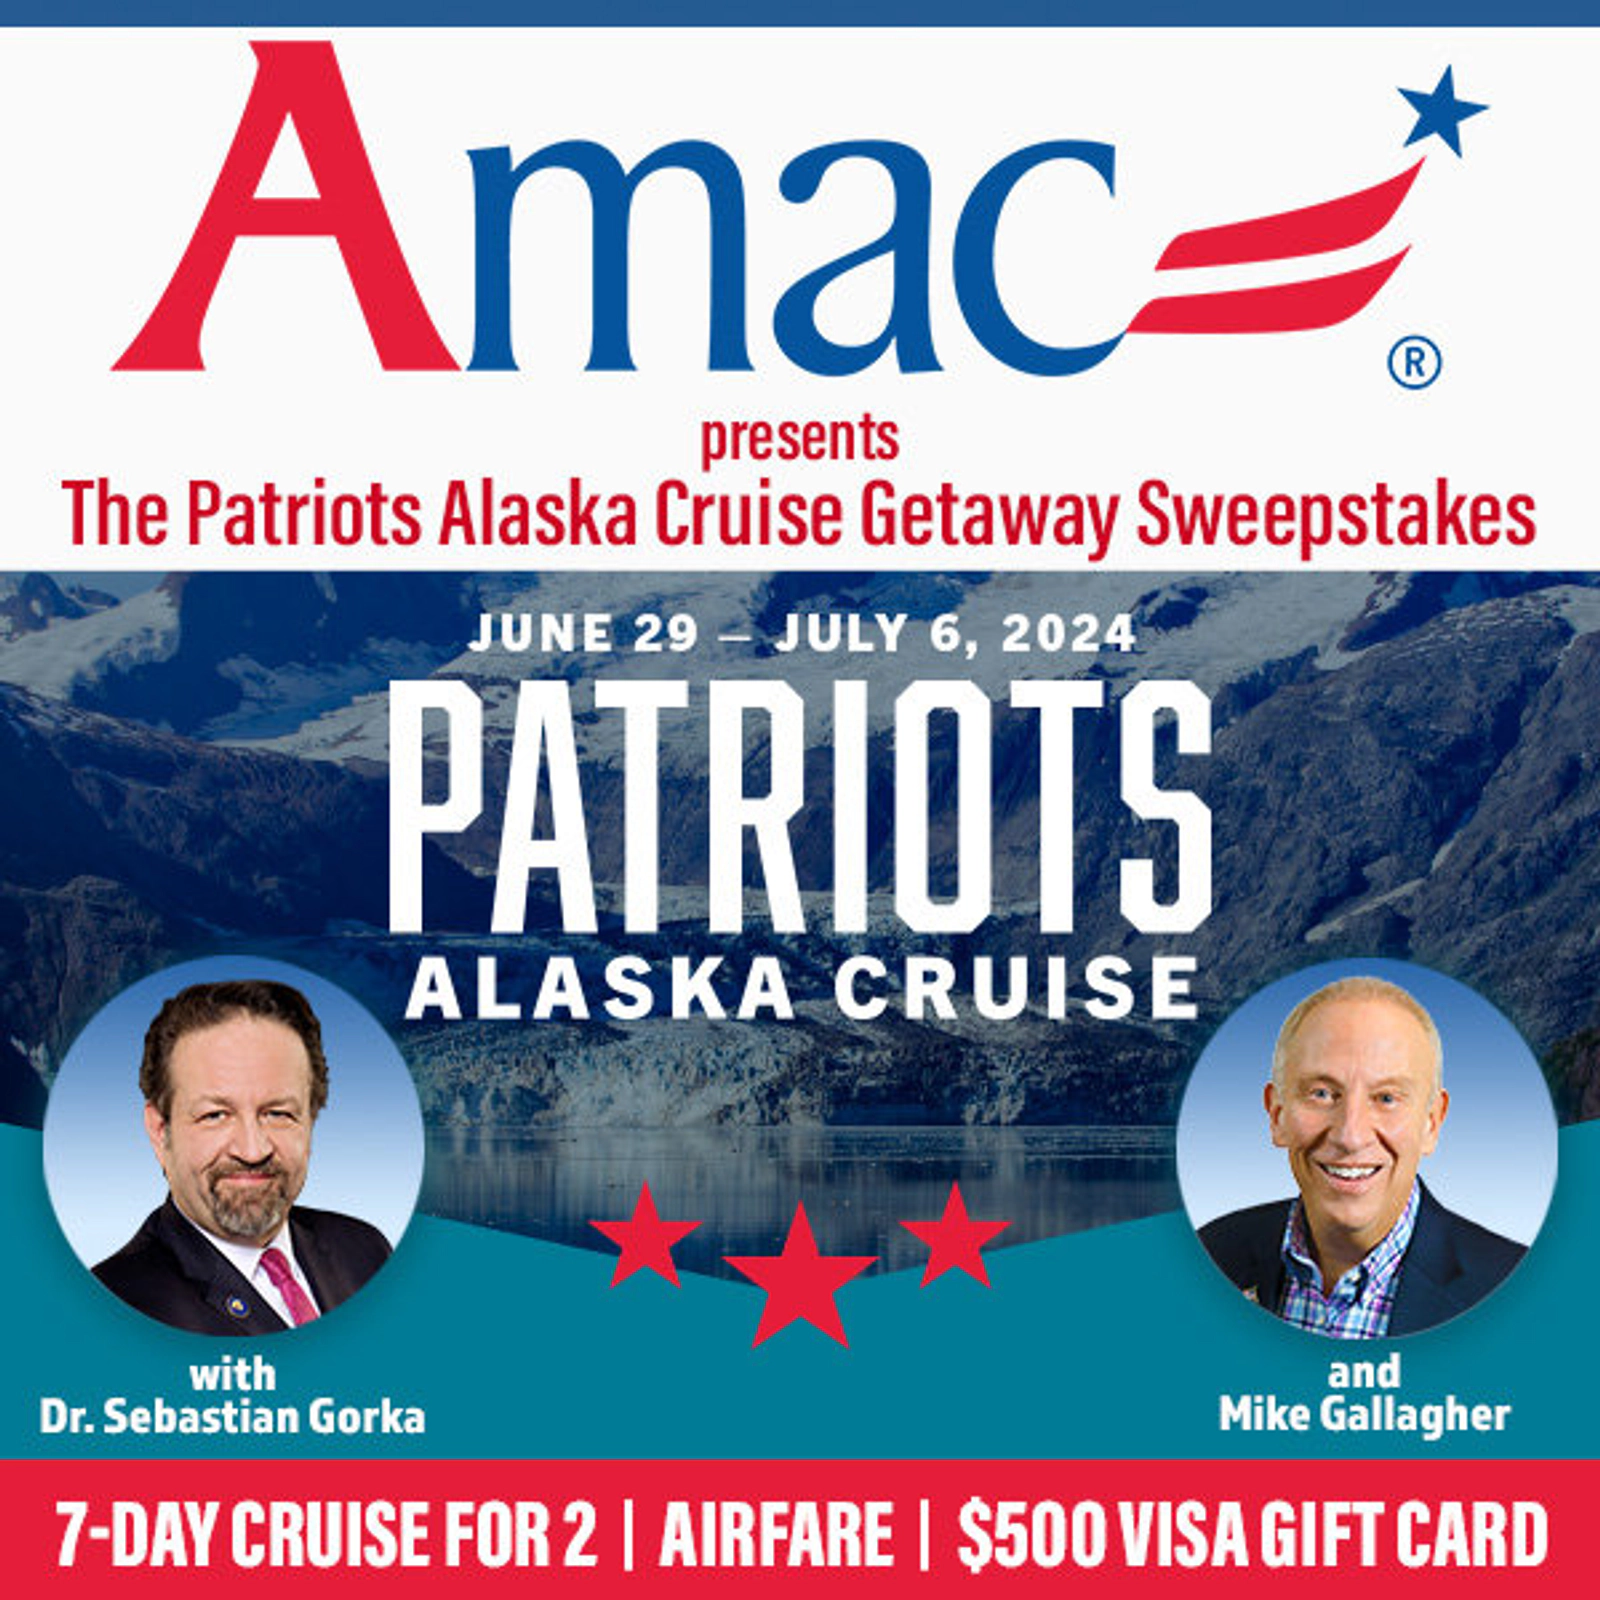 AMAC presents The Patriots Alaska Cruise Getaway Sweepstakes